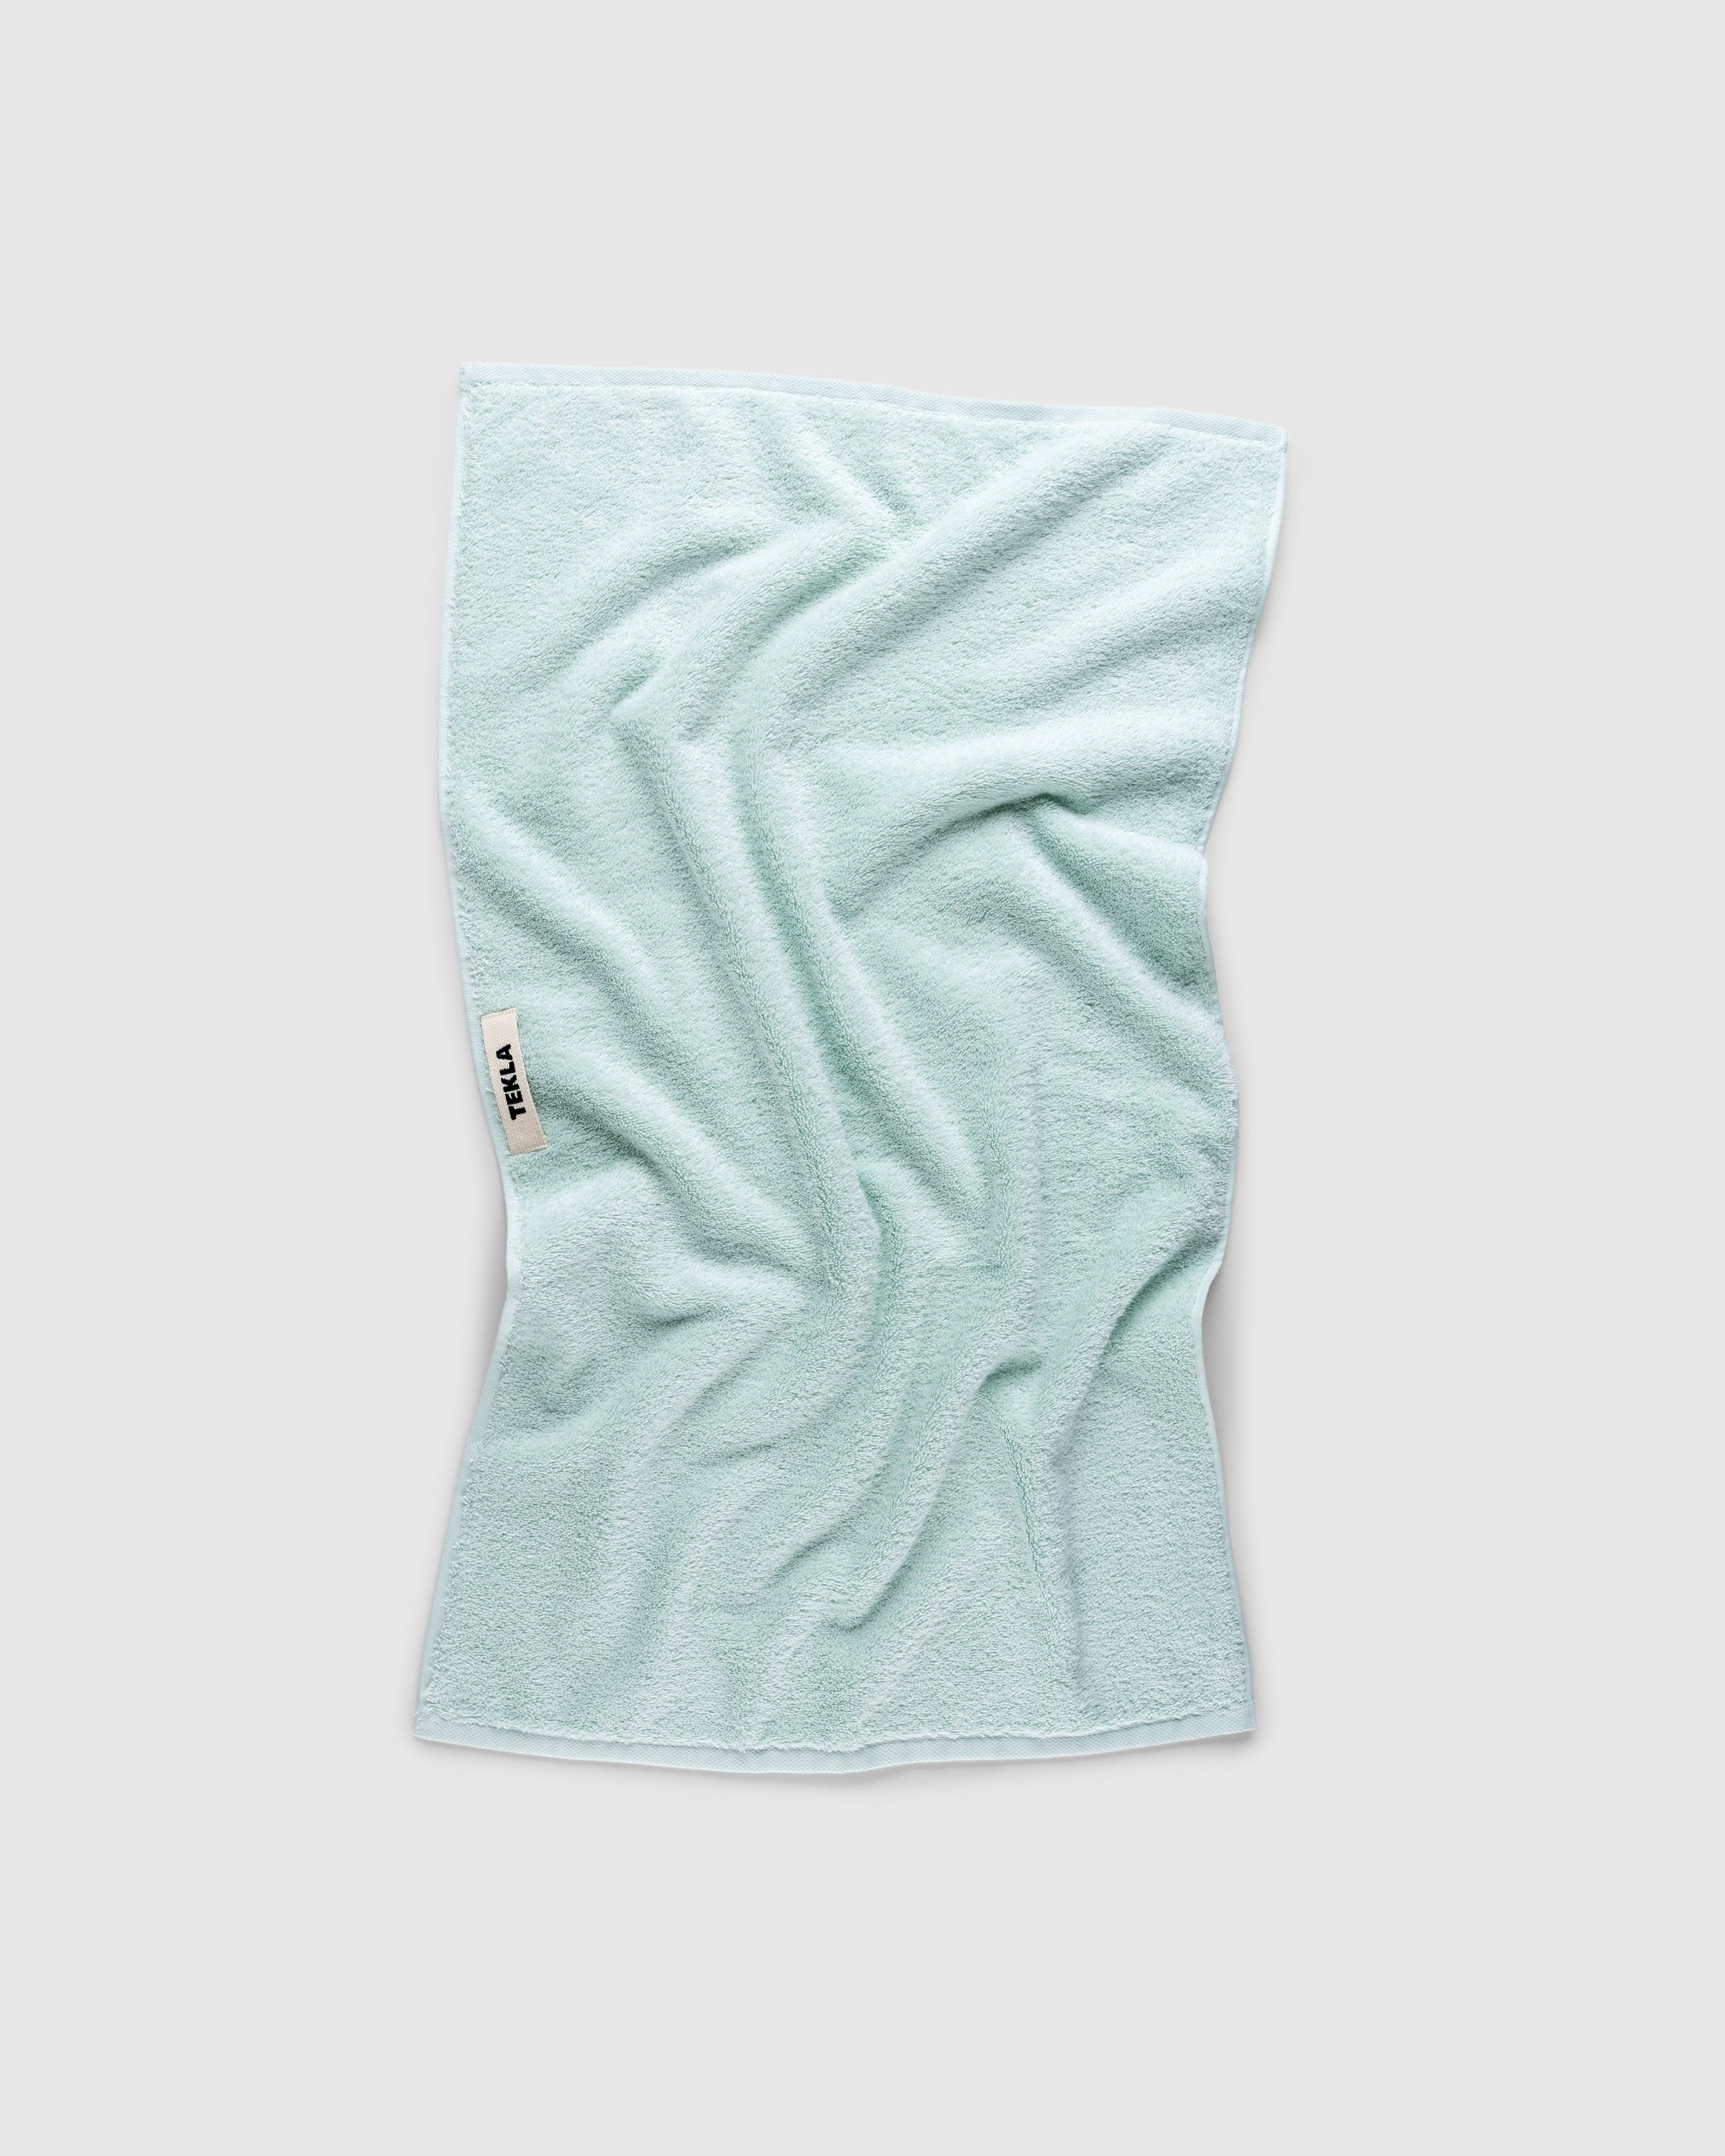 Tekla - Hand Towel Mint - Lifestyle - Green - Image 1